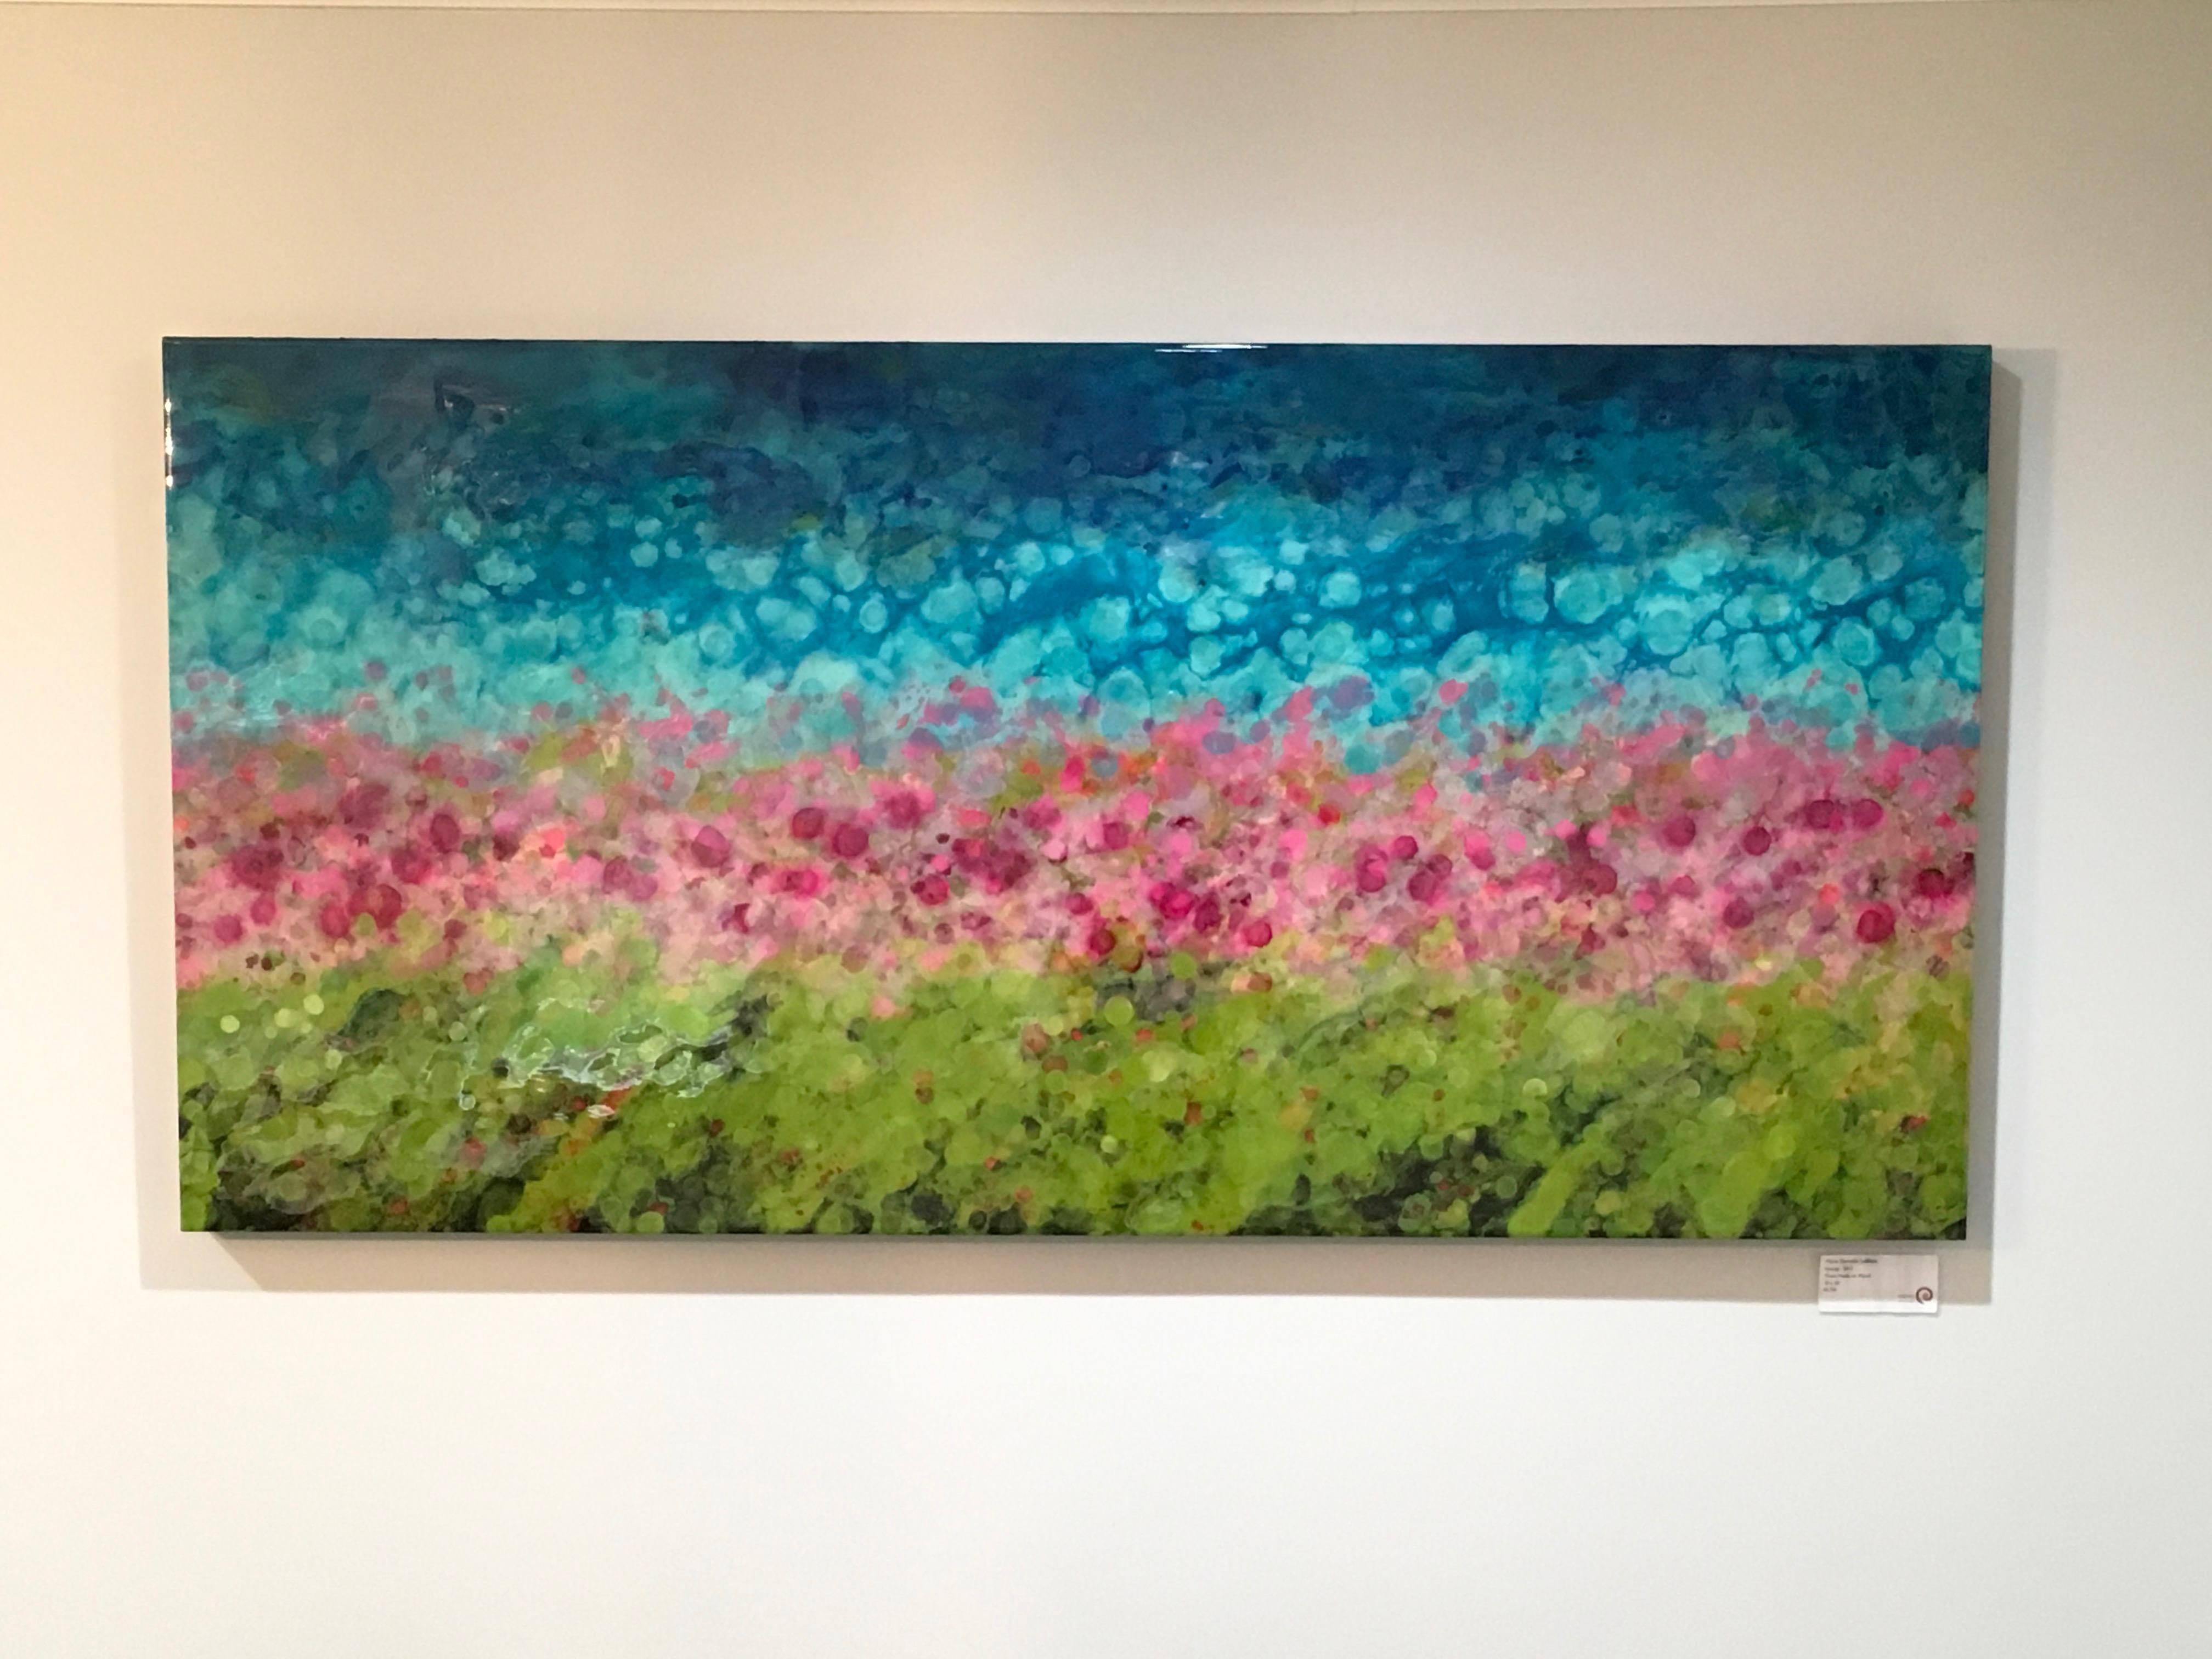 Marie Danielle Leblanc Landscape Painting - Hyangjia, Colorful Abstract Landscape, Blue, Pink, Green, hi-gloss finish, 30x60